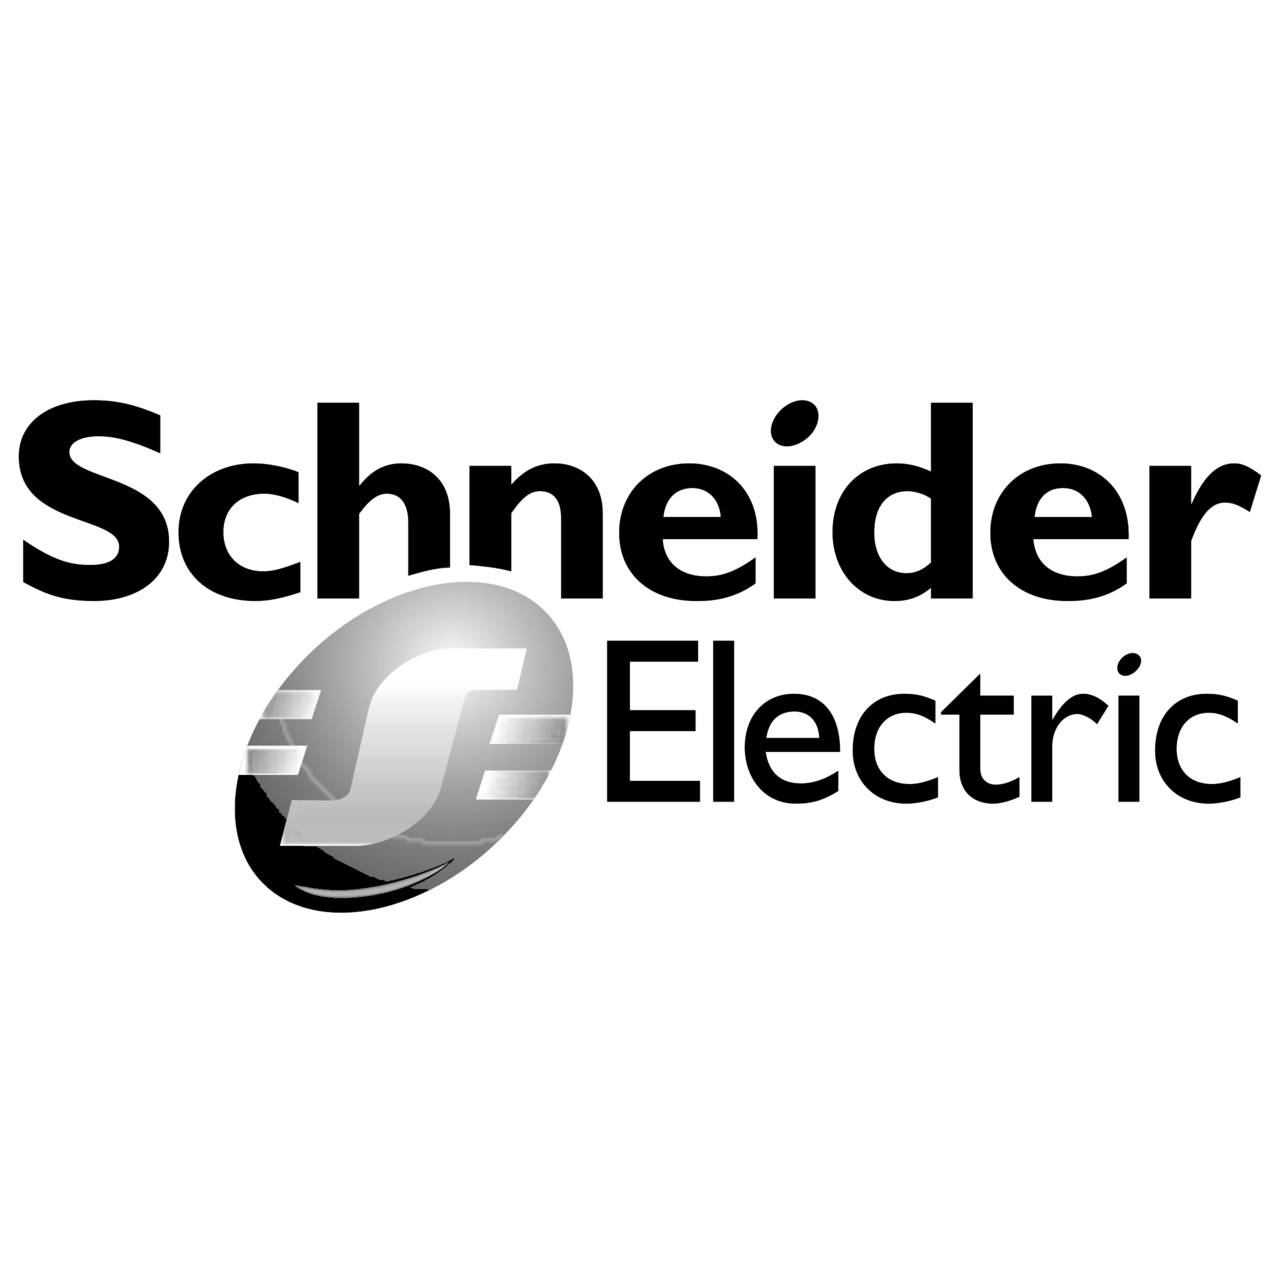 schneider-electric-logo-black-and-white